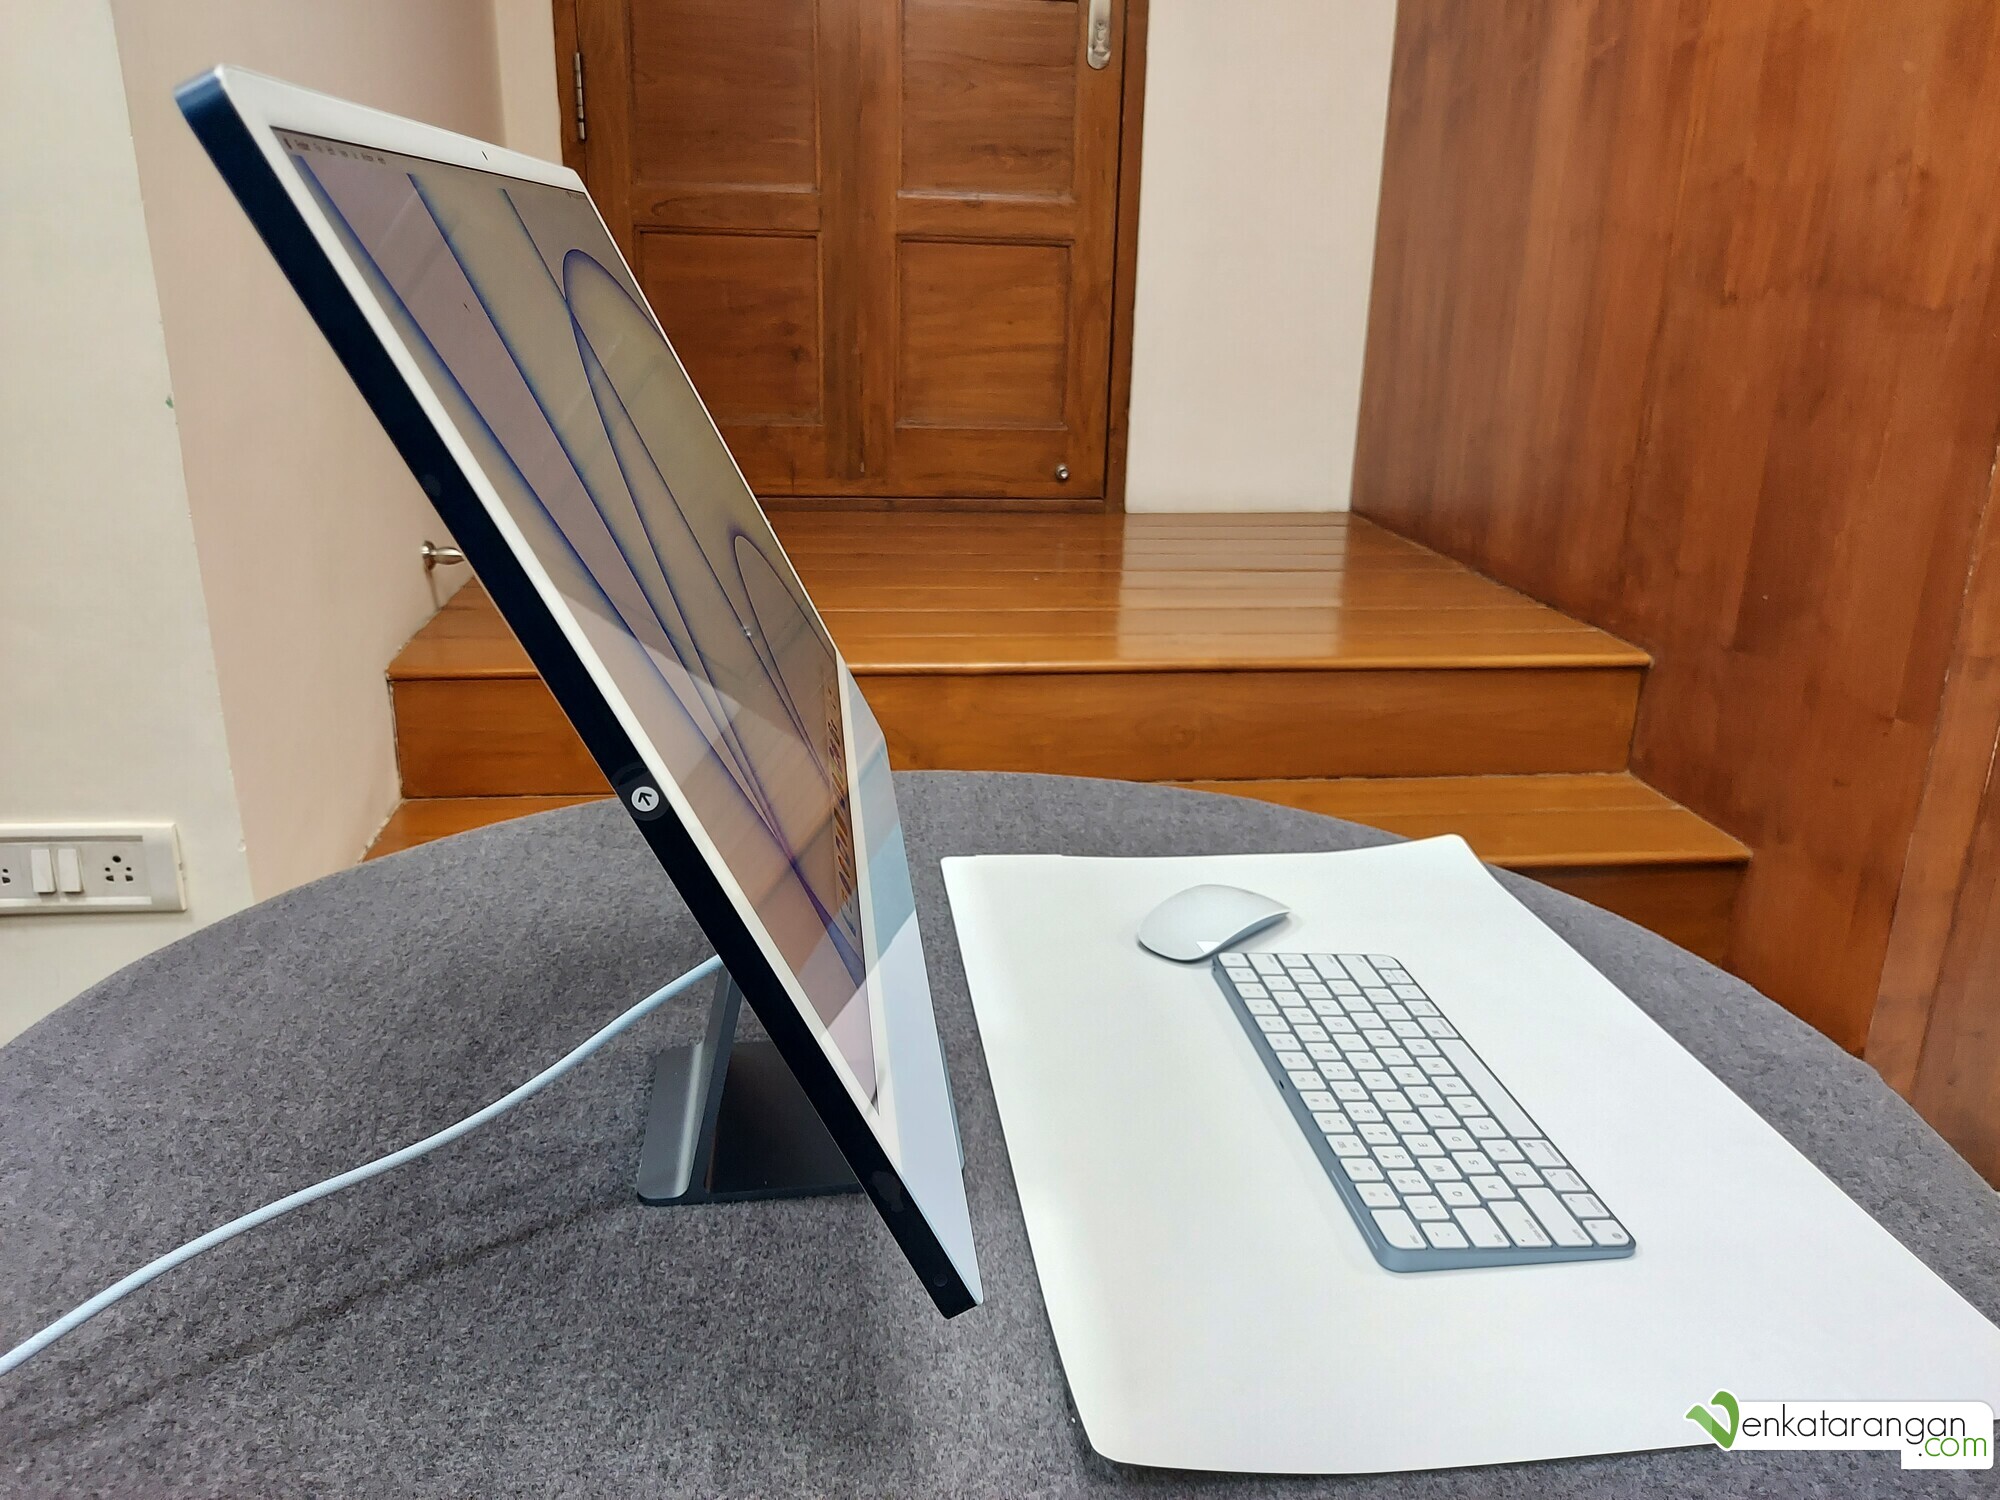 Apple Silicon 24-inch Blue iMac - super thin, like an iPad Pro